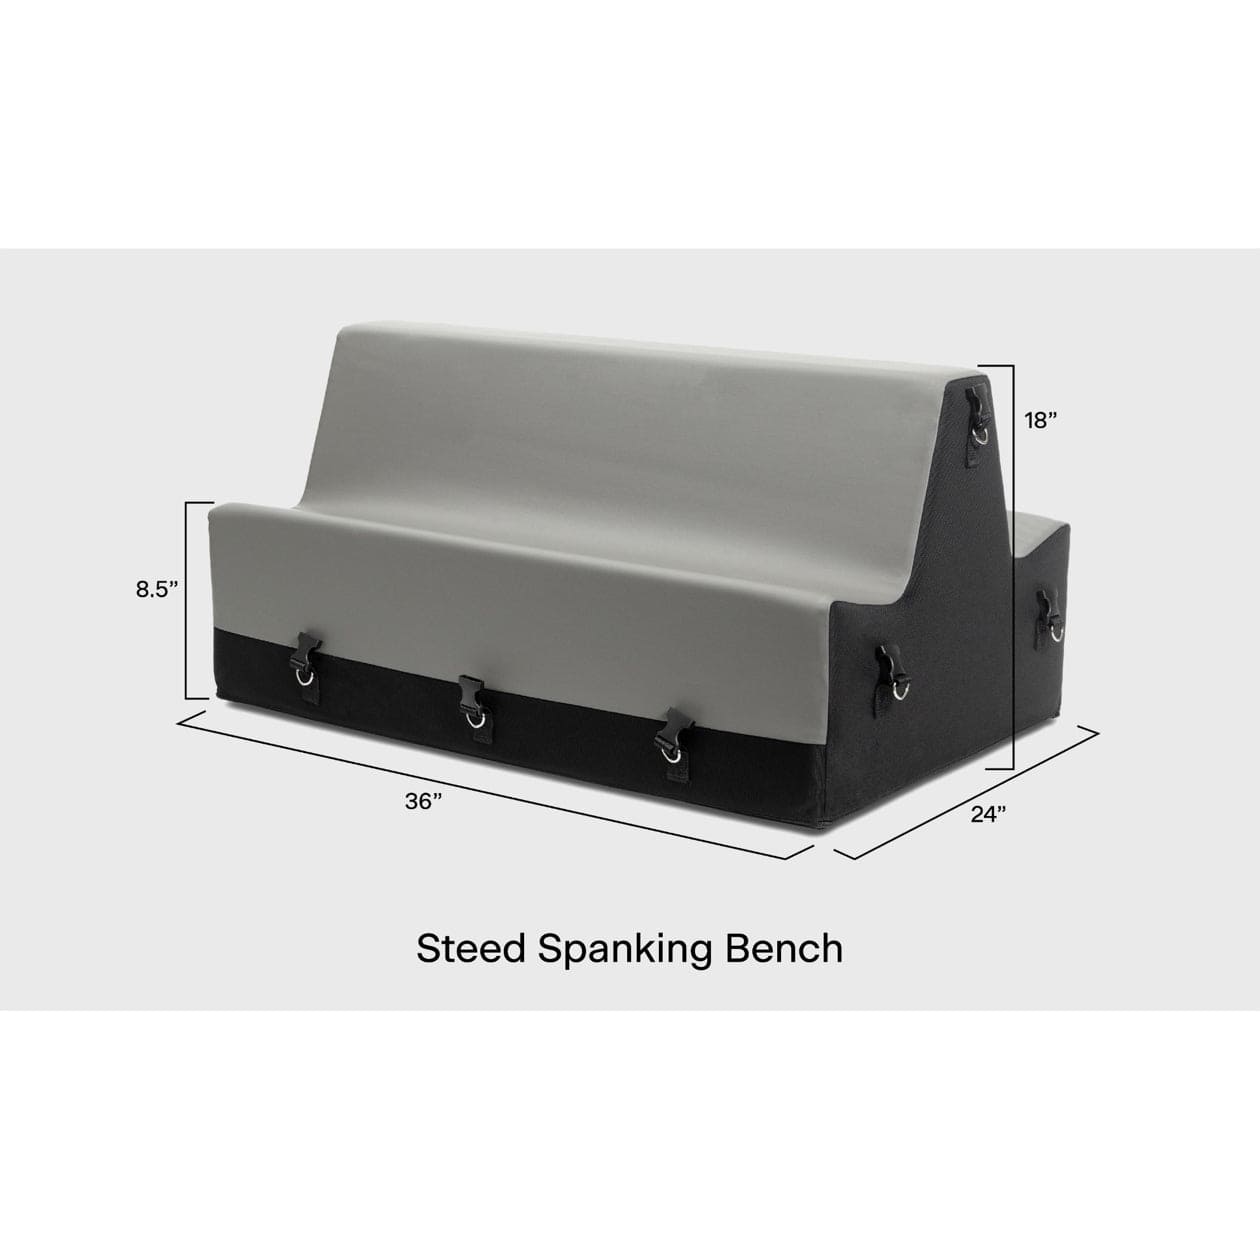 Liberator® Steed Spanking Bench Dimensions - Rolik®